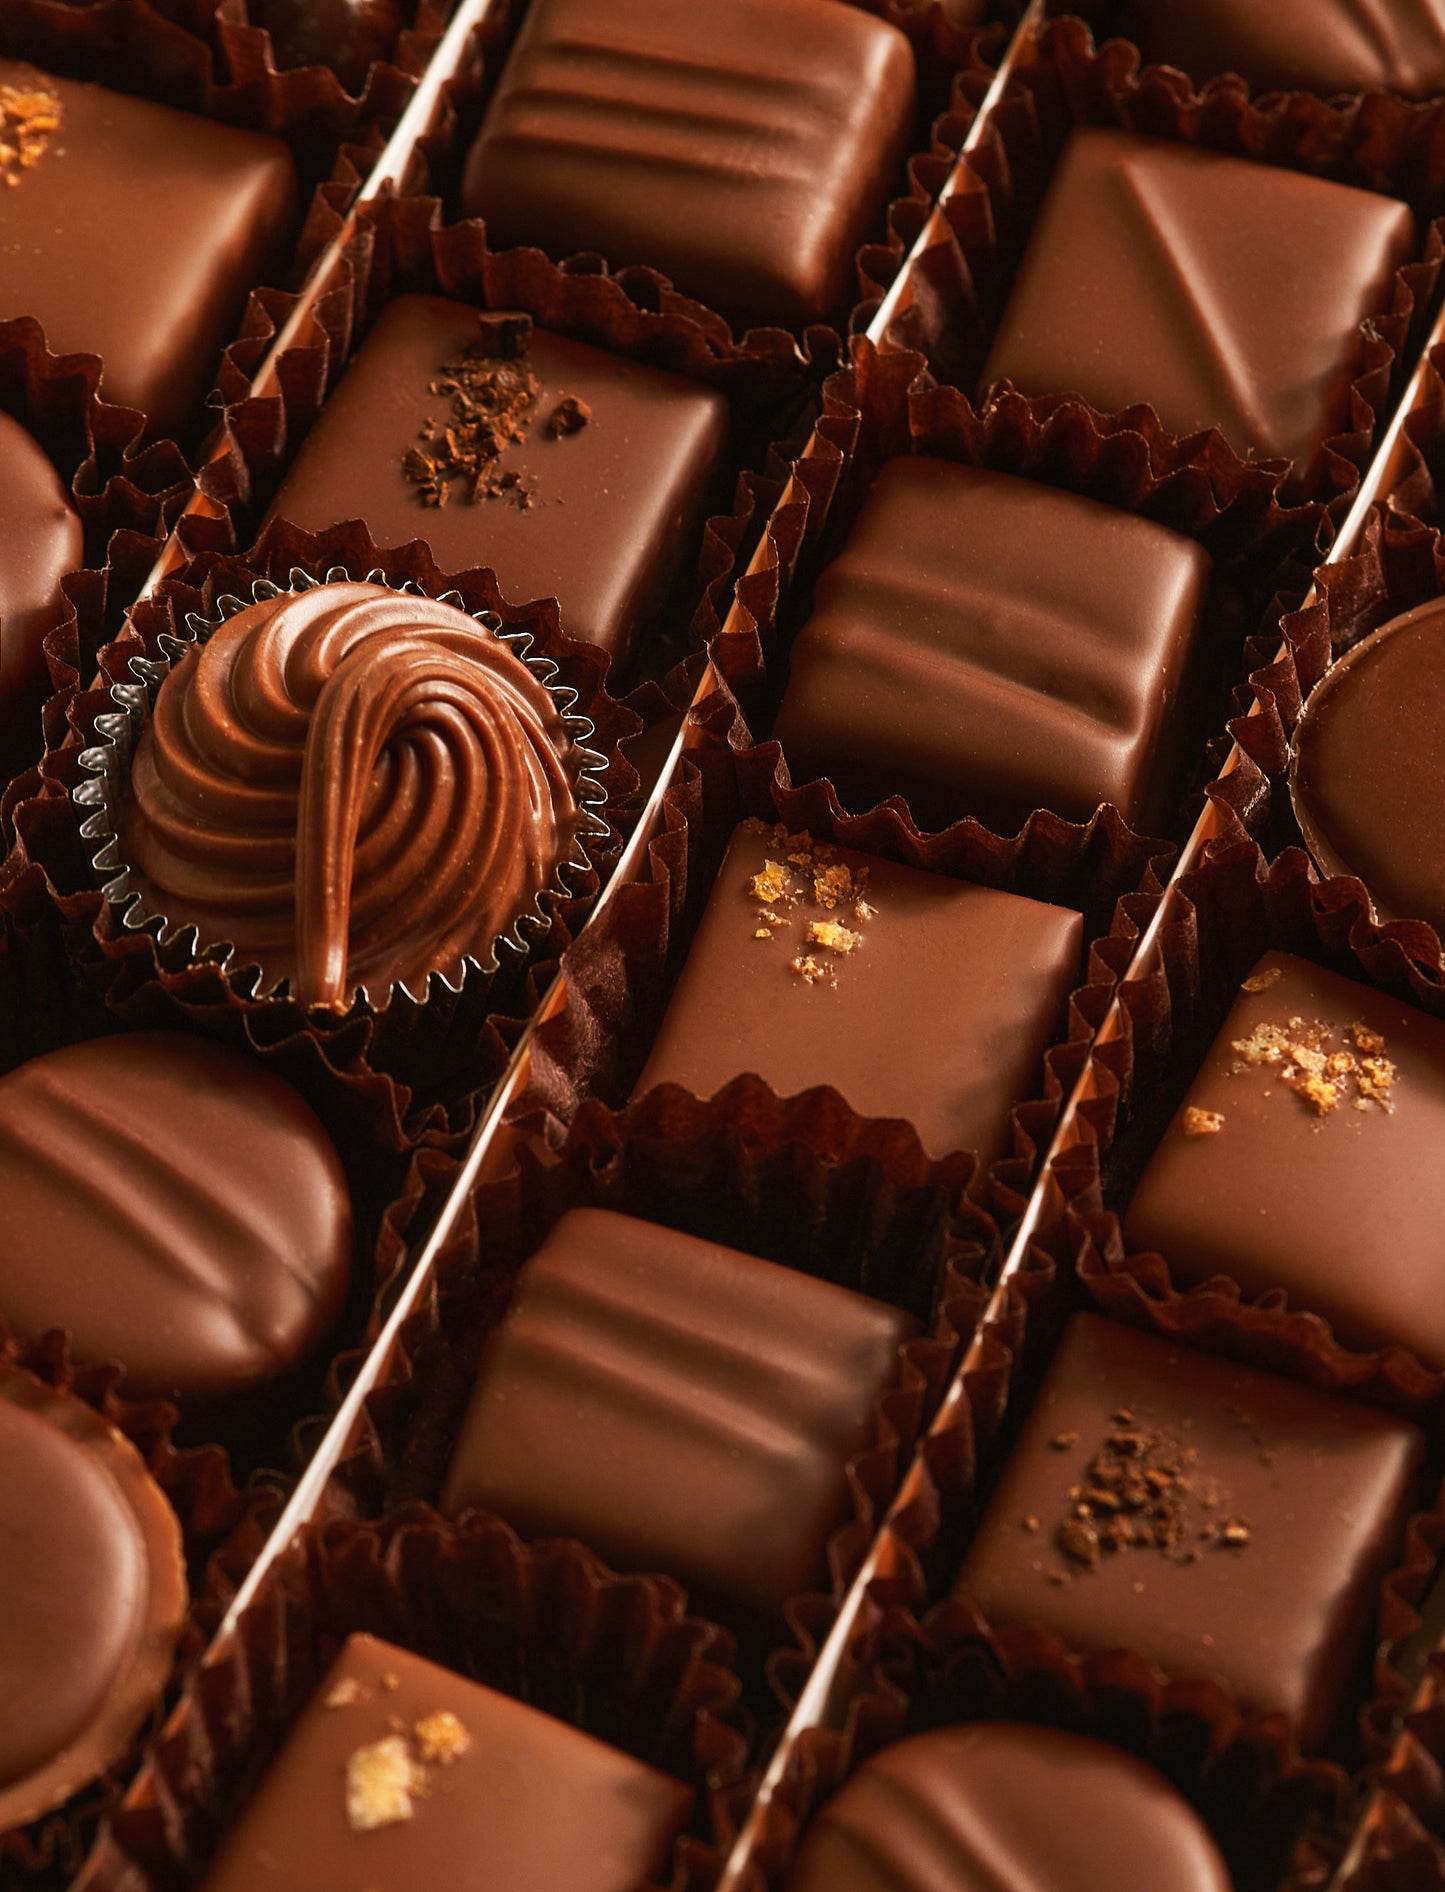 Les Laits (54 Chocolates)